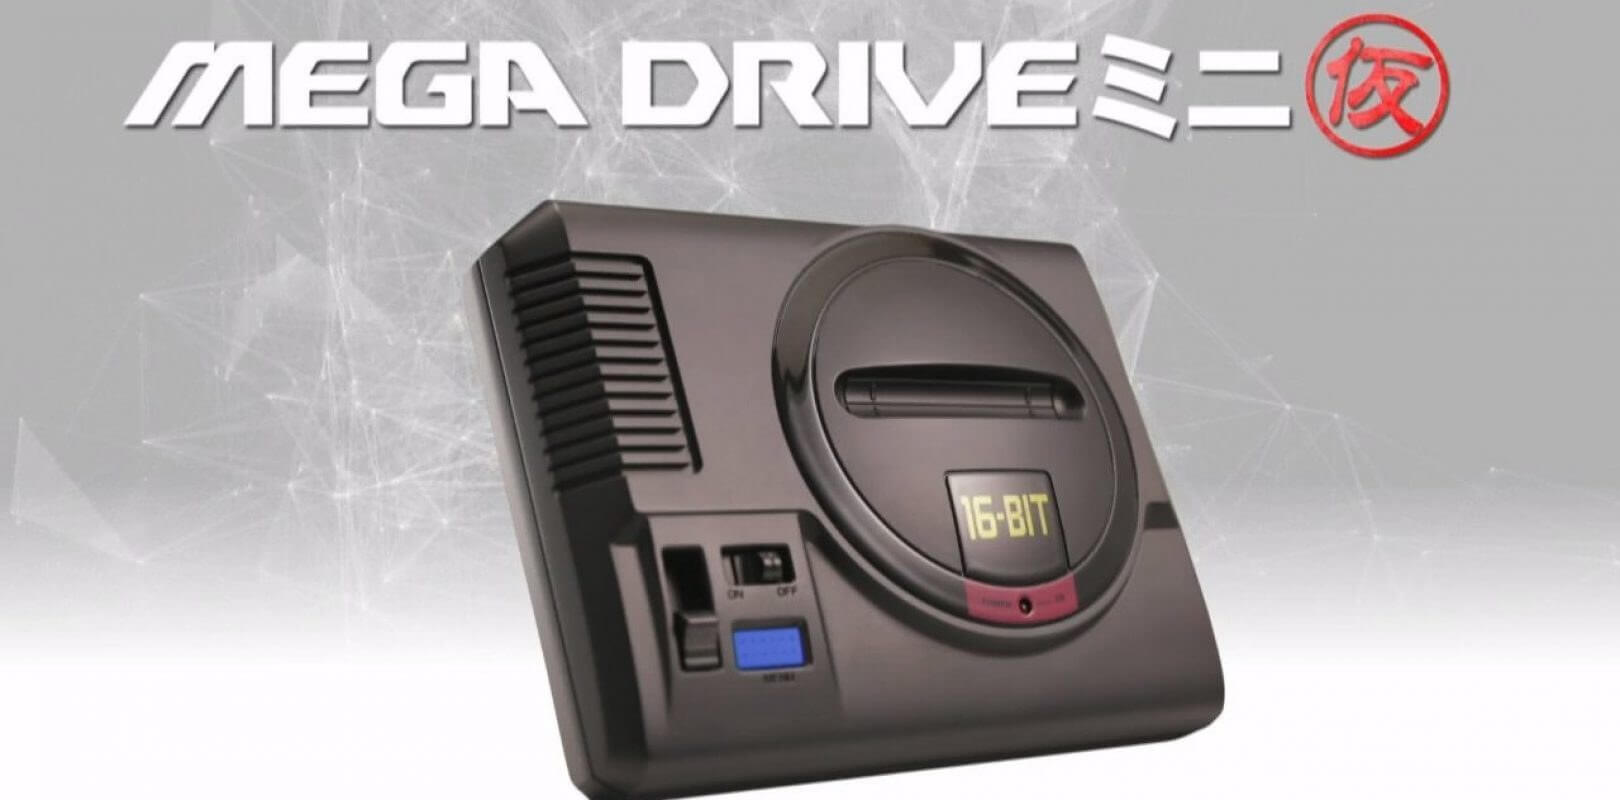 Sega's Mega Drive Mini, a miniature version of the Genesis, is arriving in 2018